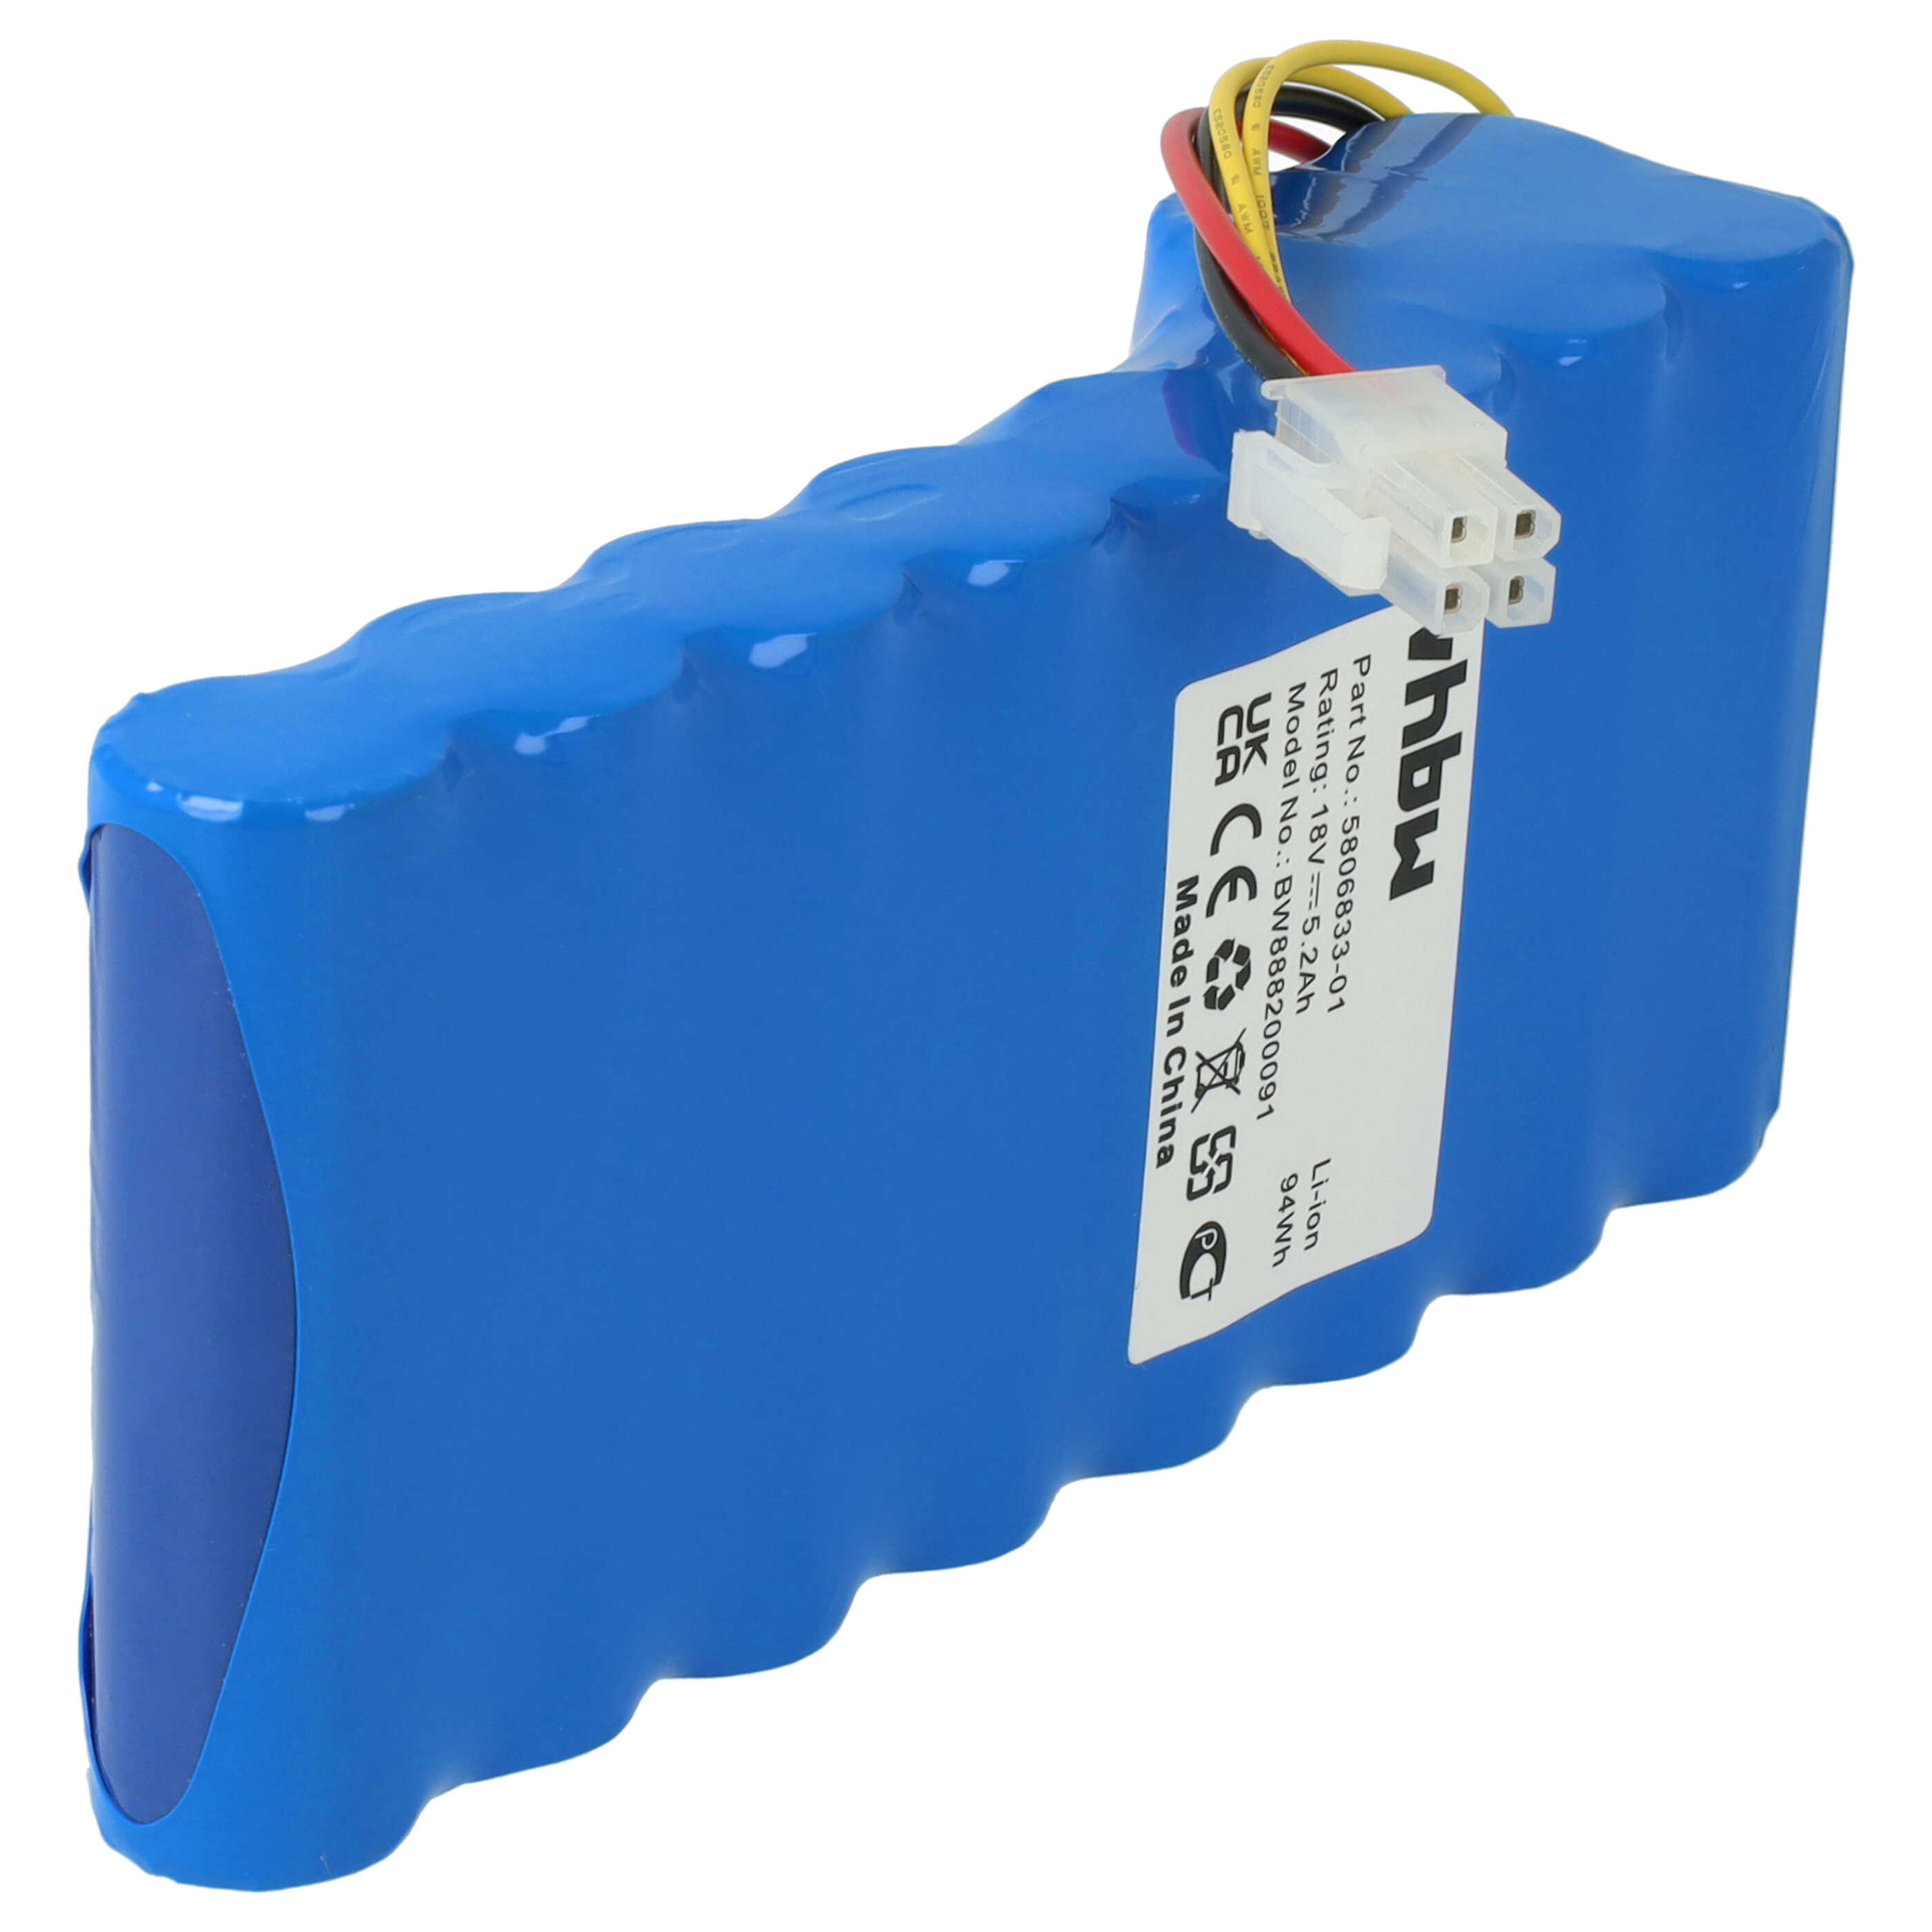 Lawnmower Battery Pack Replacement for Husqvarna 580 68 33-01, 580683301, 5806833-01 - 5200mAh 18V Li-Ion